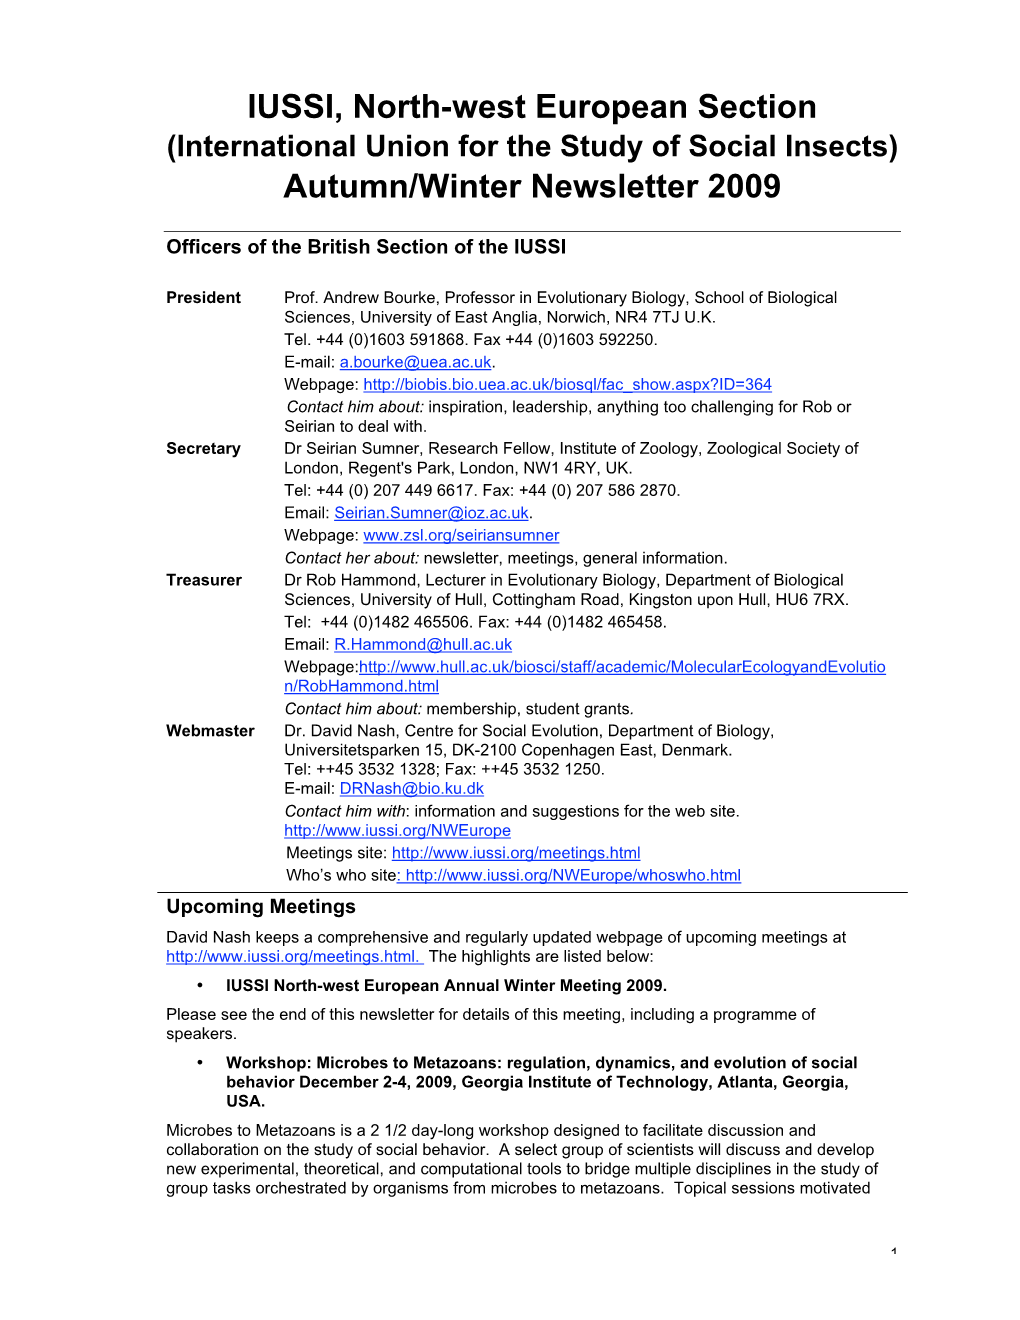 IUSSI, North-West European Section Autumn/Winter Newsletter 2009